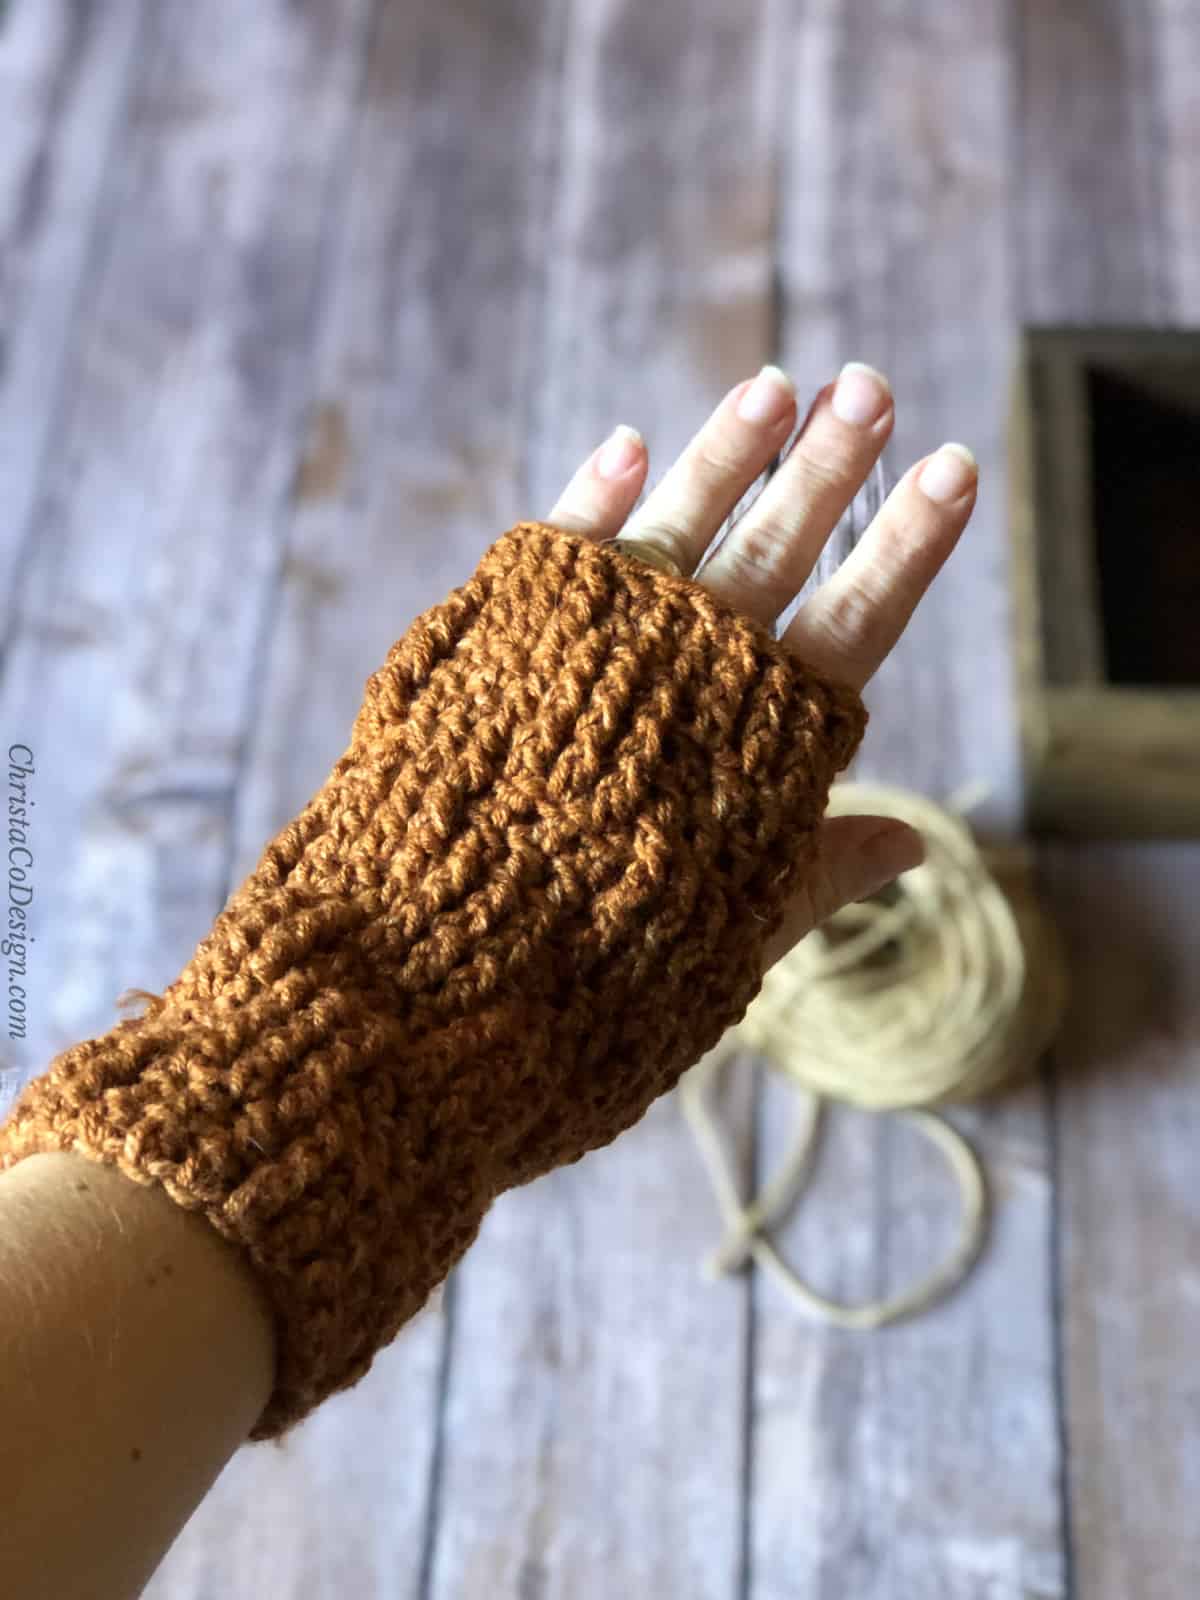 Woman's hand in crochet fingerless glove over wood backdrop.